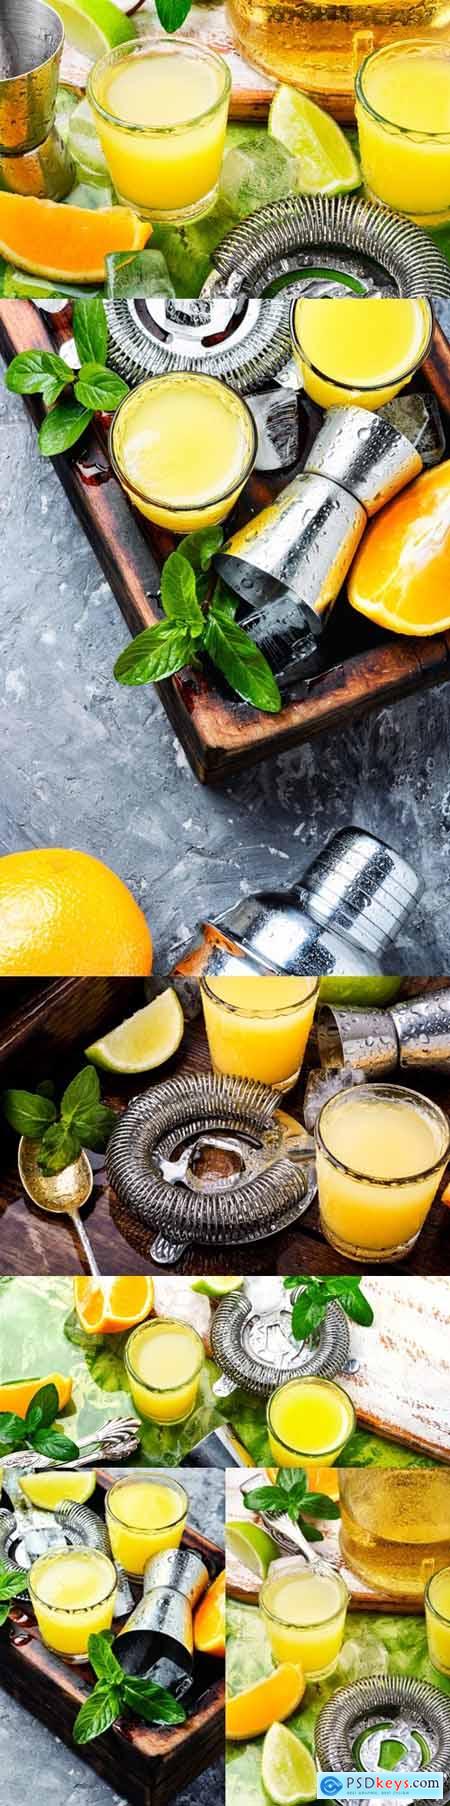 Stock Photos - Fresh cocktail with orange